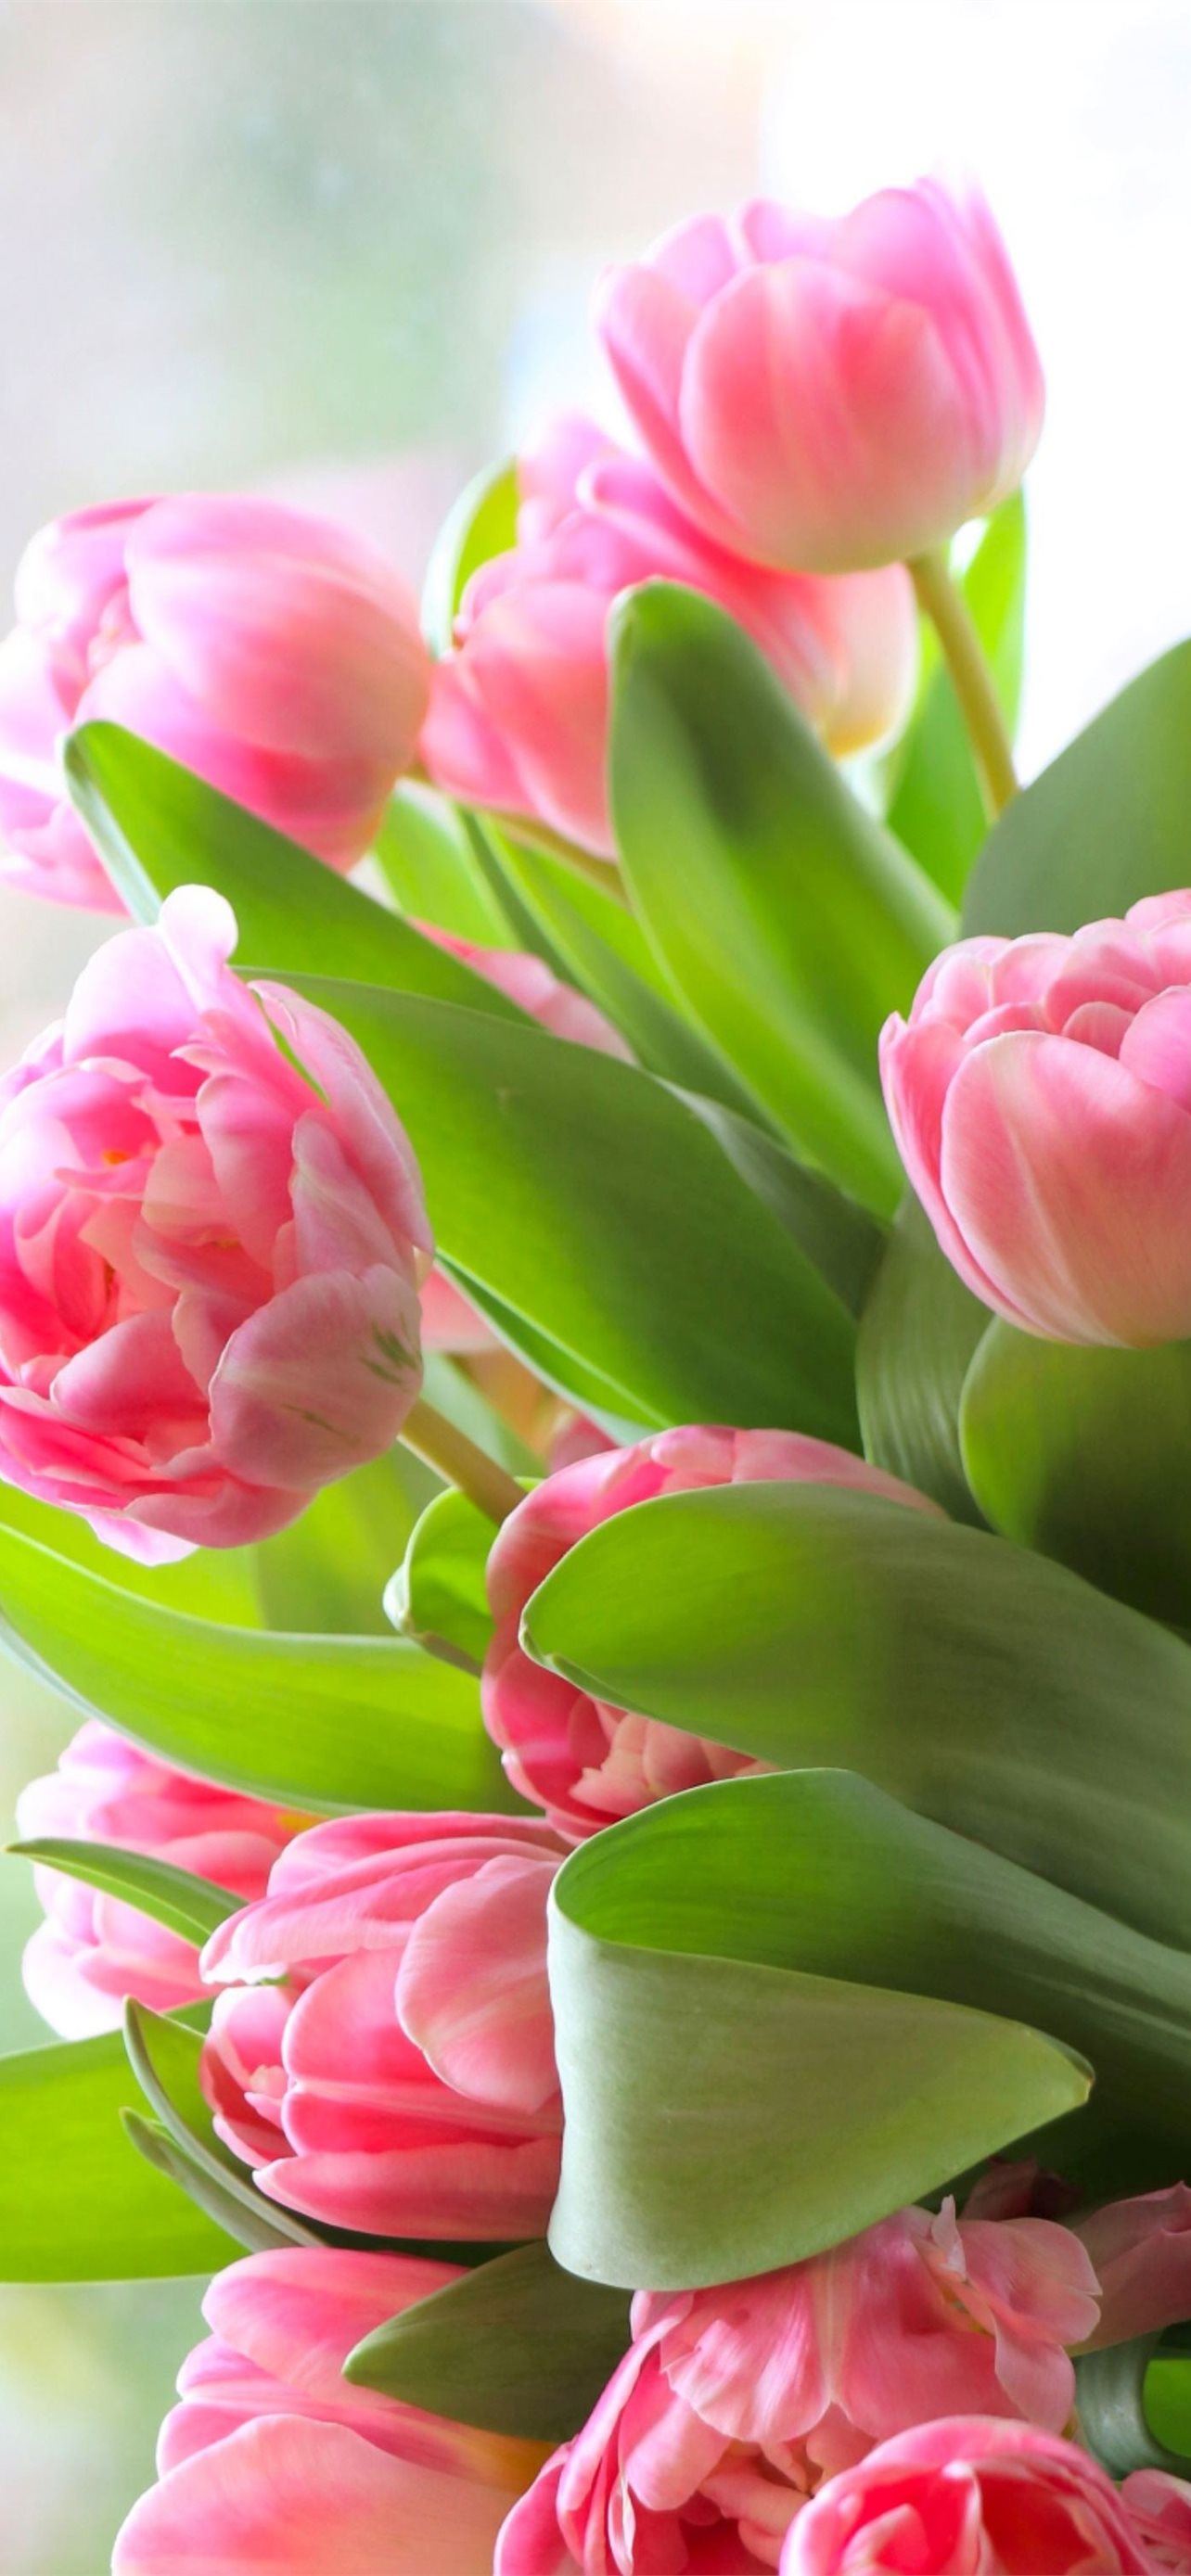 640x1136 Pink tulips Iphone 5 wallpaper